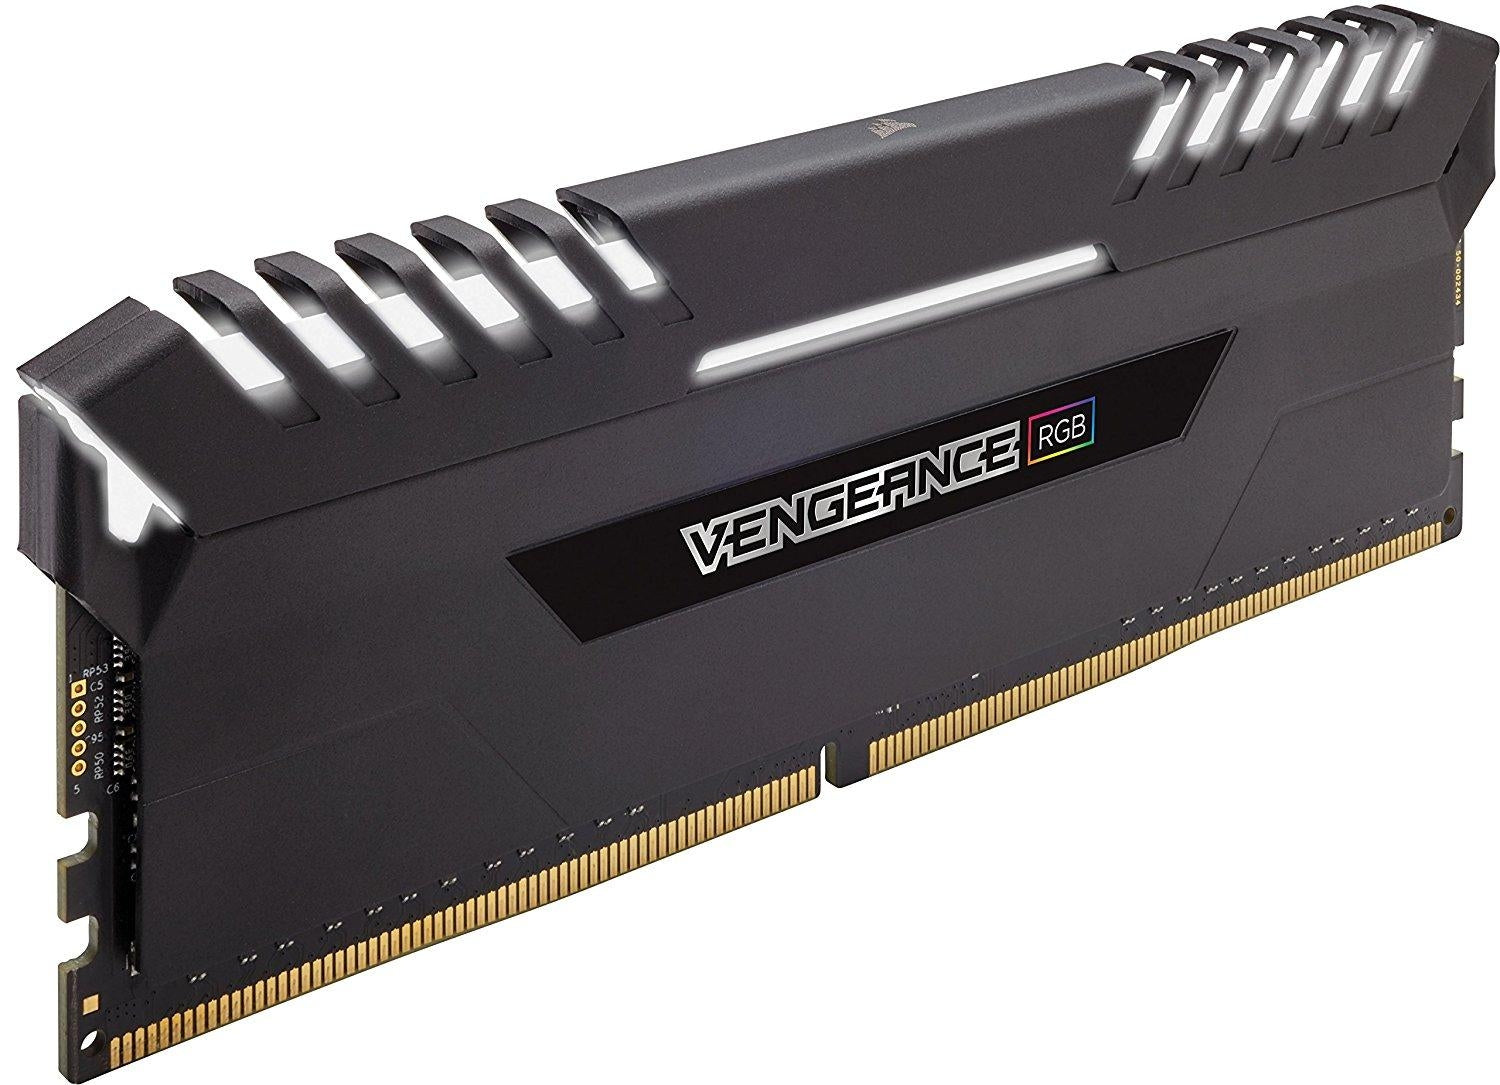 Corsair Vengeance  DDR4, 3000MHz 16GB,  2 x 8GB  , 288 DIMM, Unbuffered, 15-17-17-35, Vengeance Black Heat s (CMR16GX4M2C3000C15) - V&L Canada